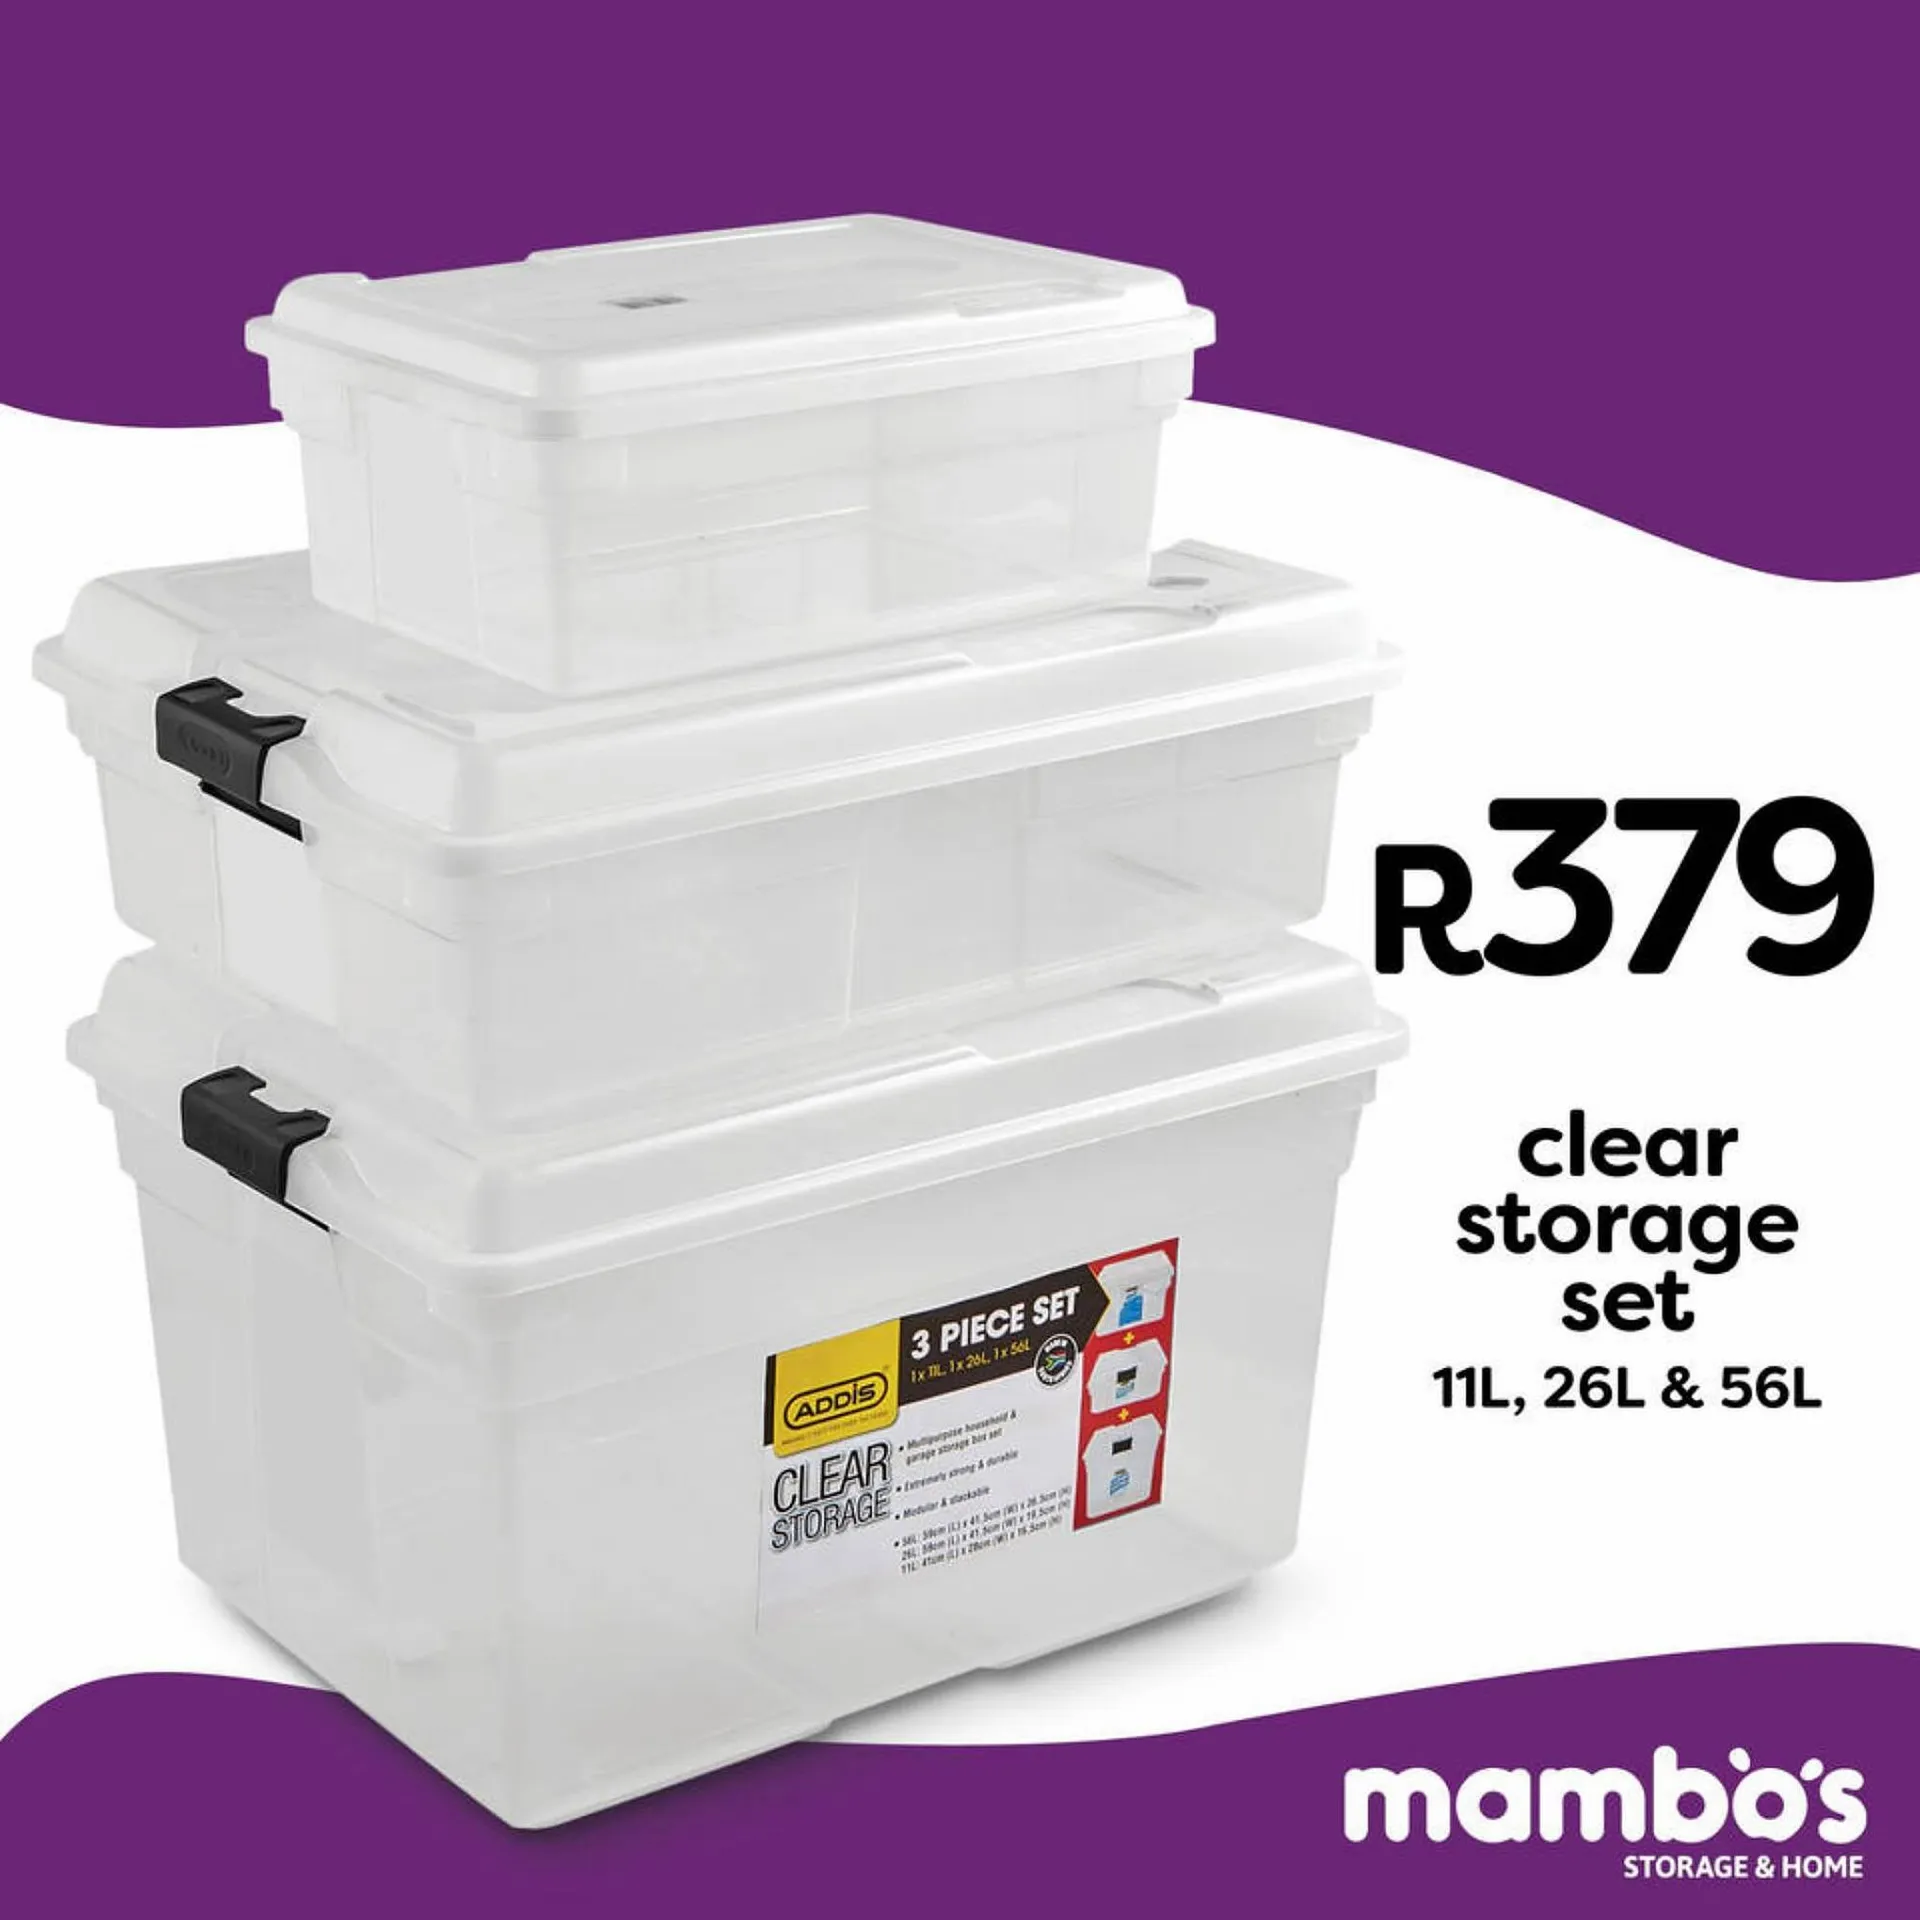 Mambos Plastics Warehouse catalogue - 3